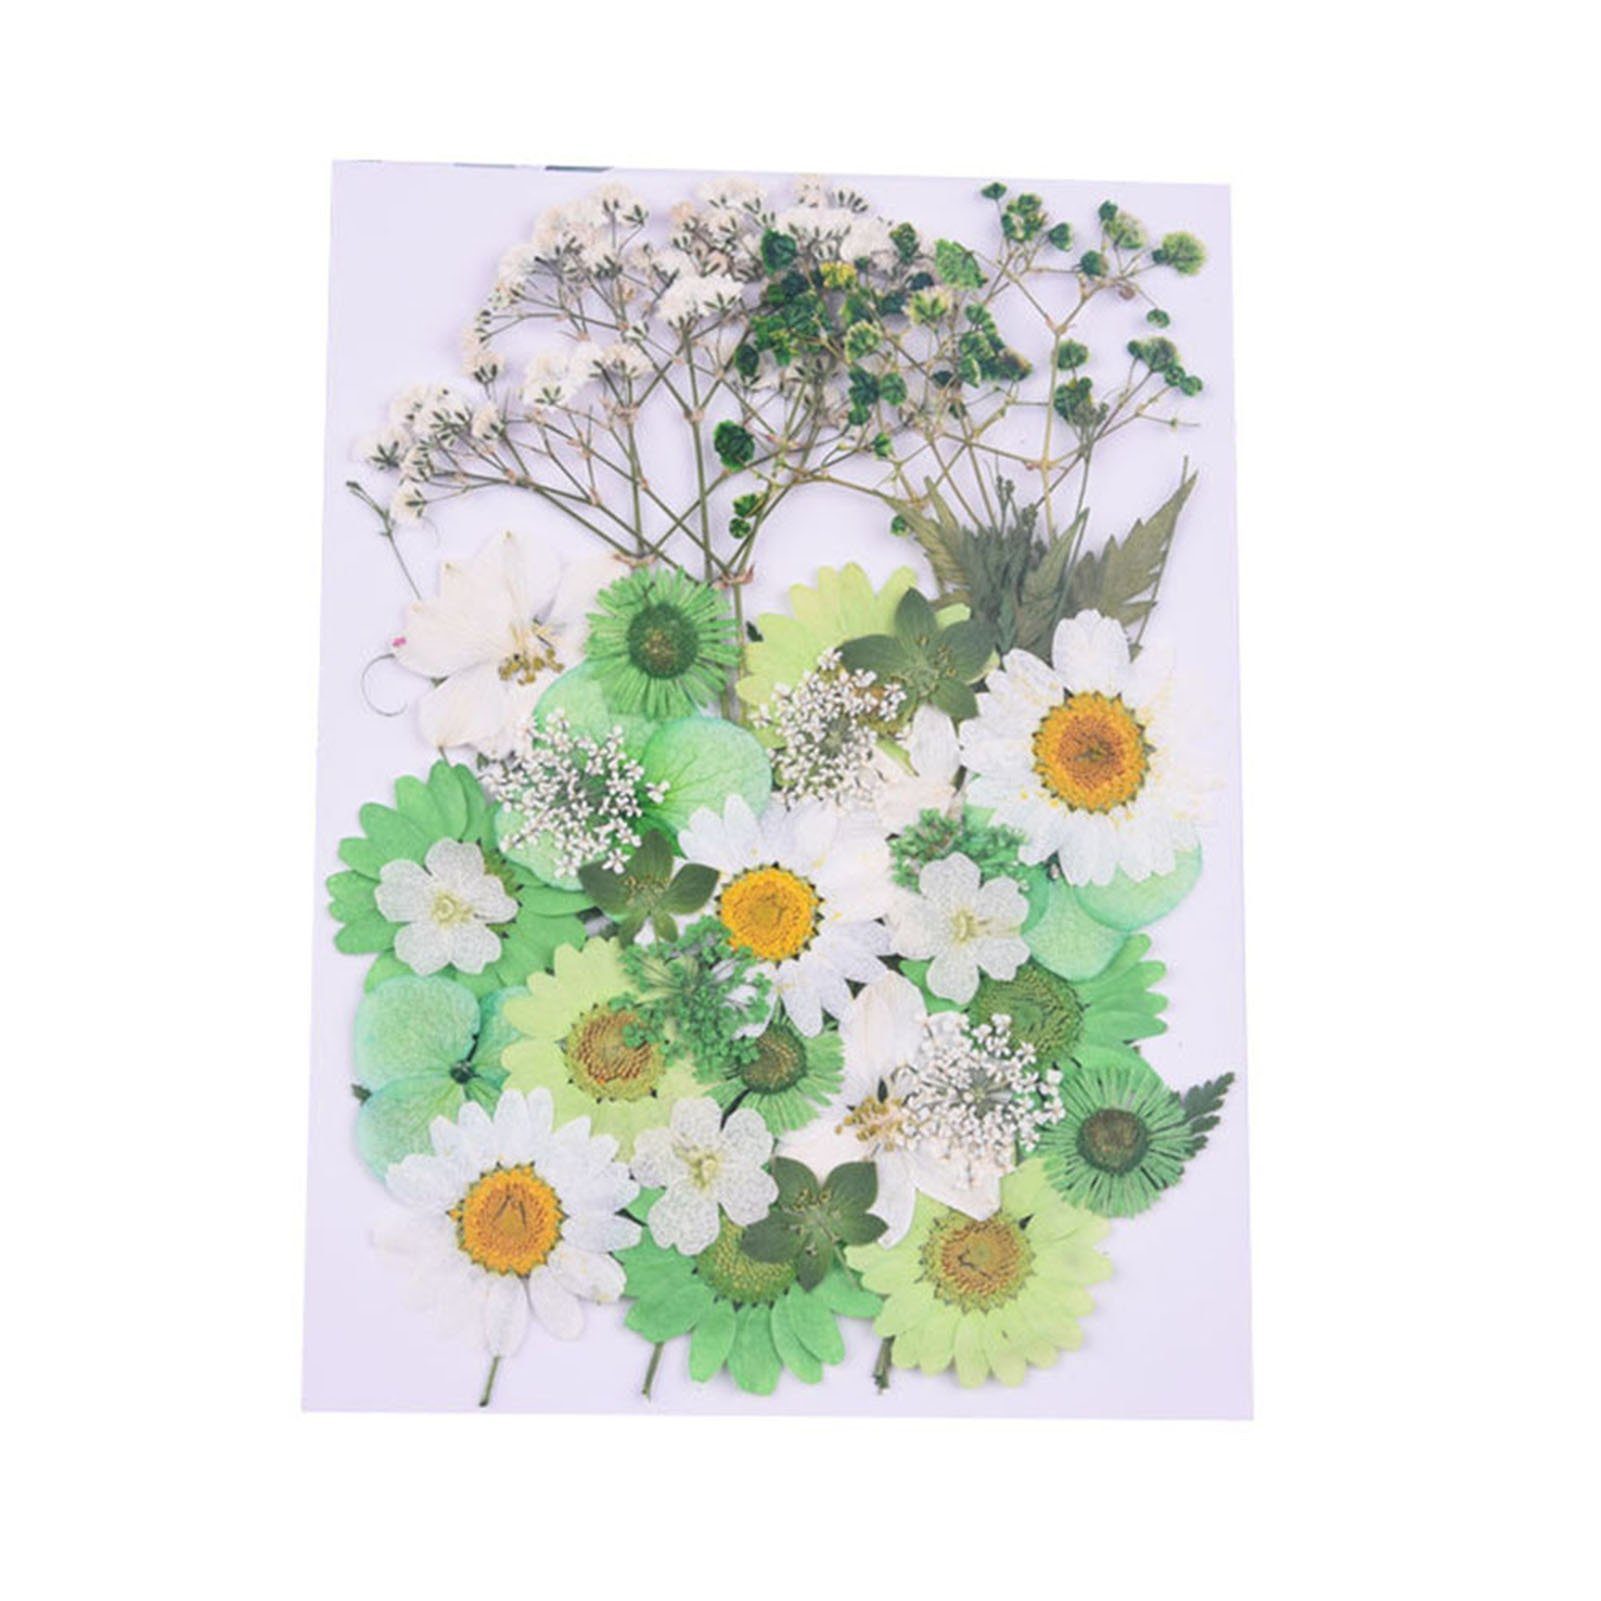 Zum Blusmart white Trockenblumen-Set Selbermachen, Trockenblume Blumen, green Getrocknetes, Gepresste